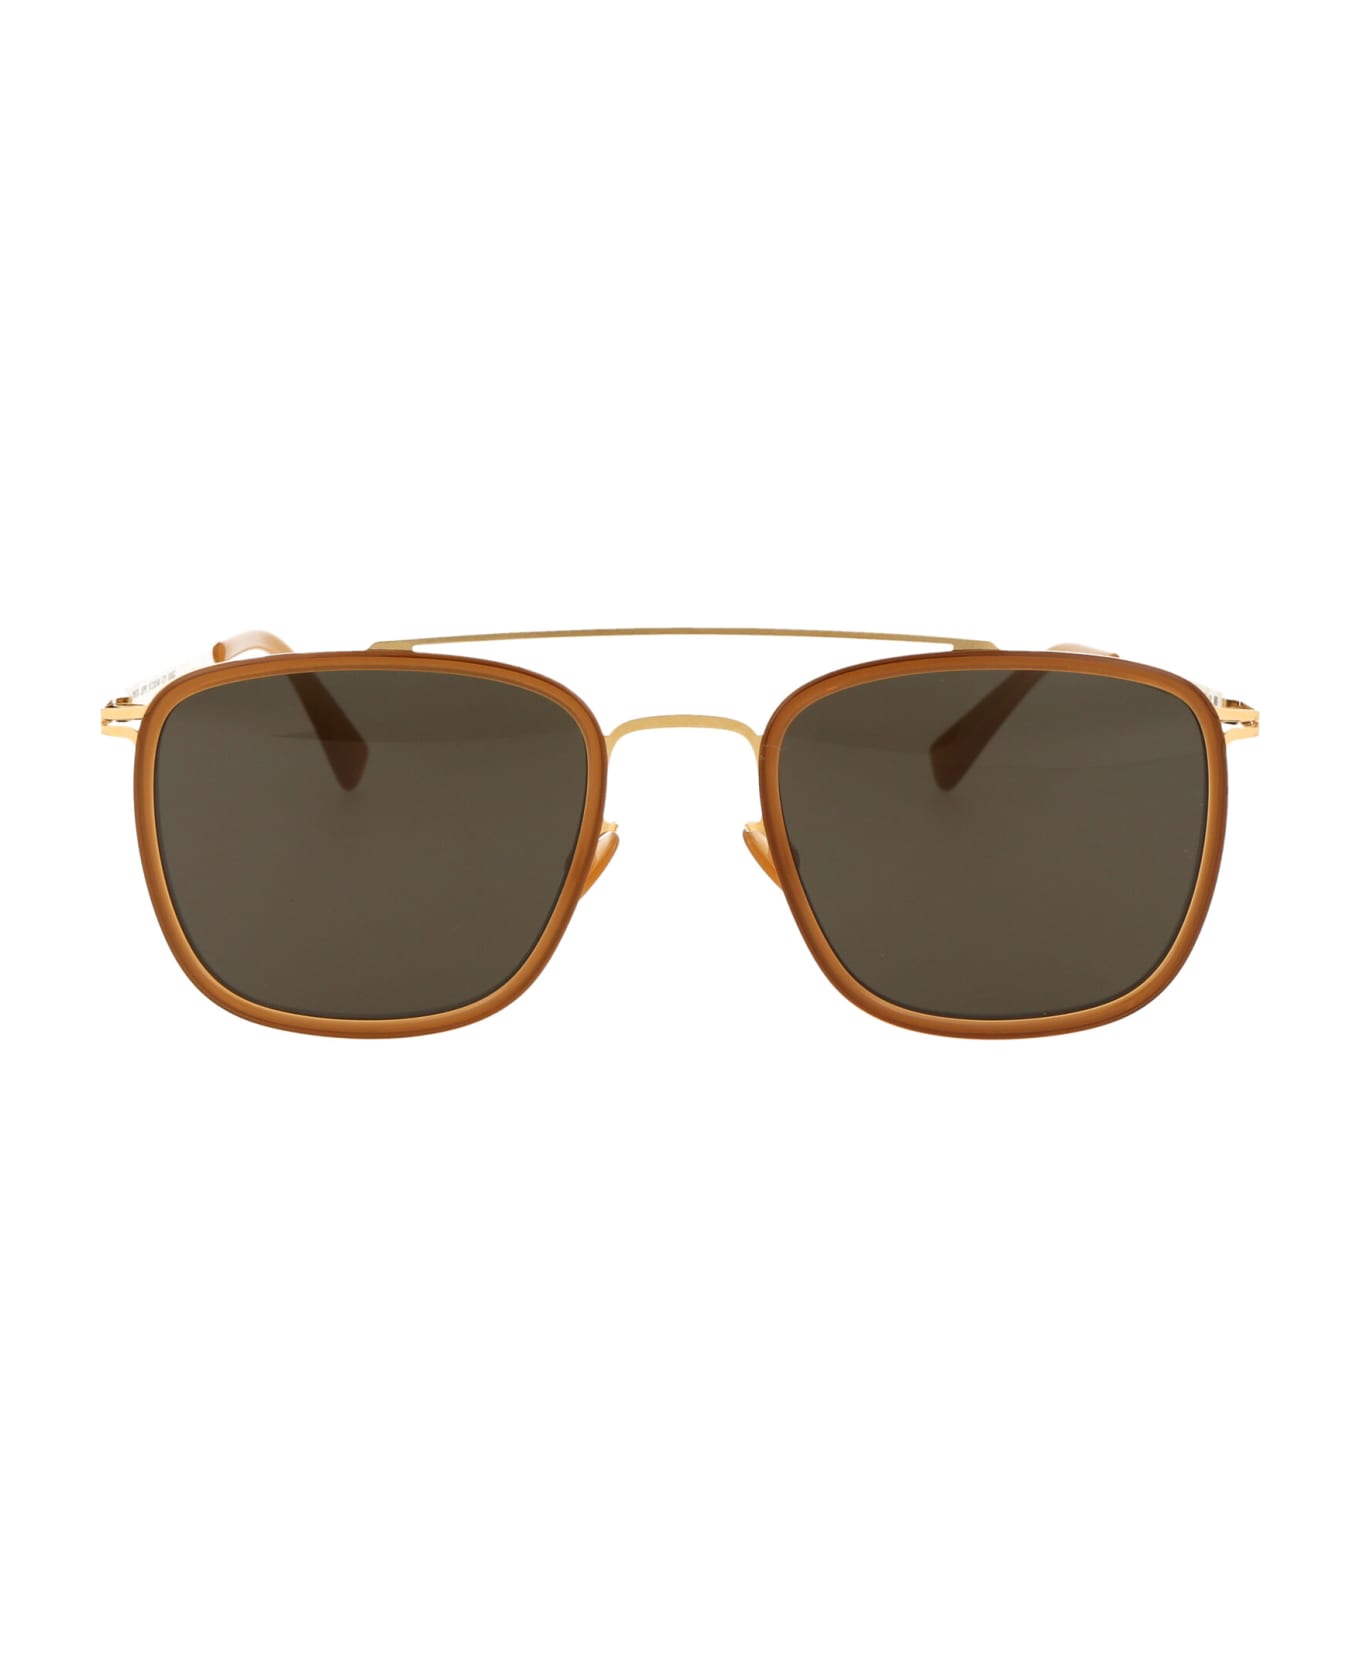 Mykita Jeppe Sunglasses - 701 A56 Glossy Gold/Brown Dark Bro Rawgreen Solid